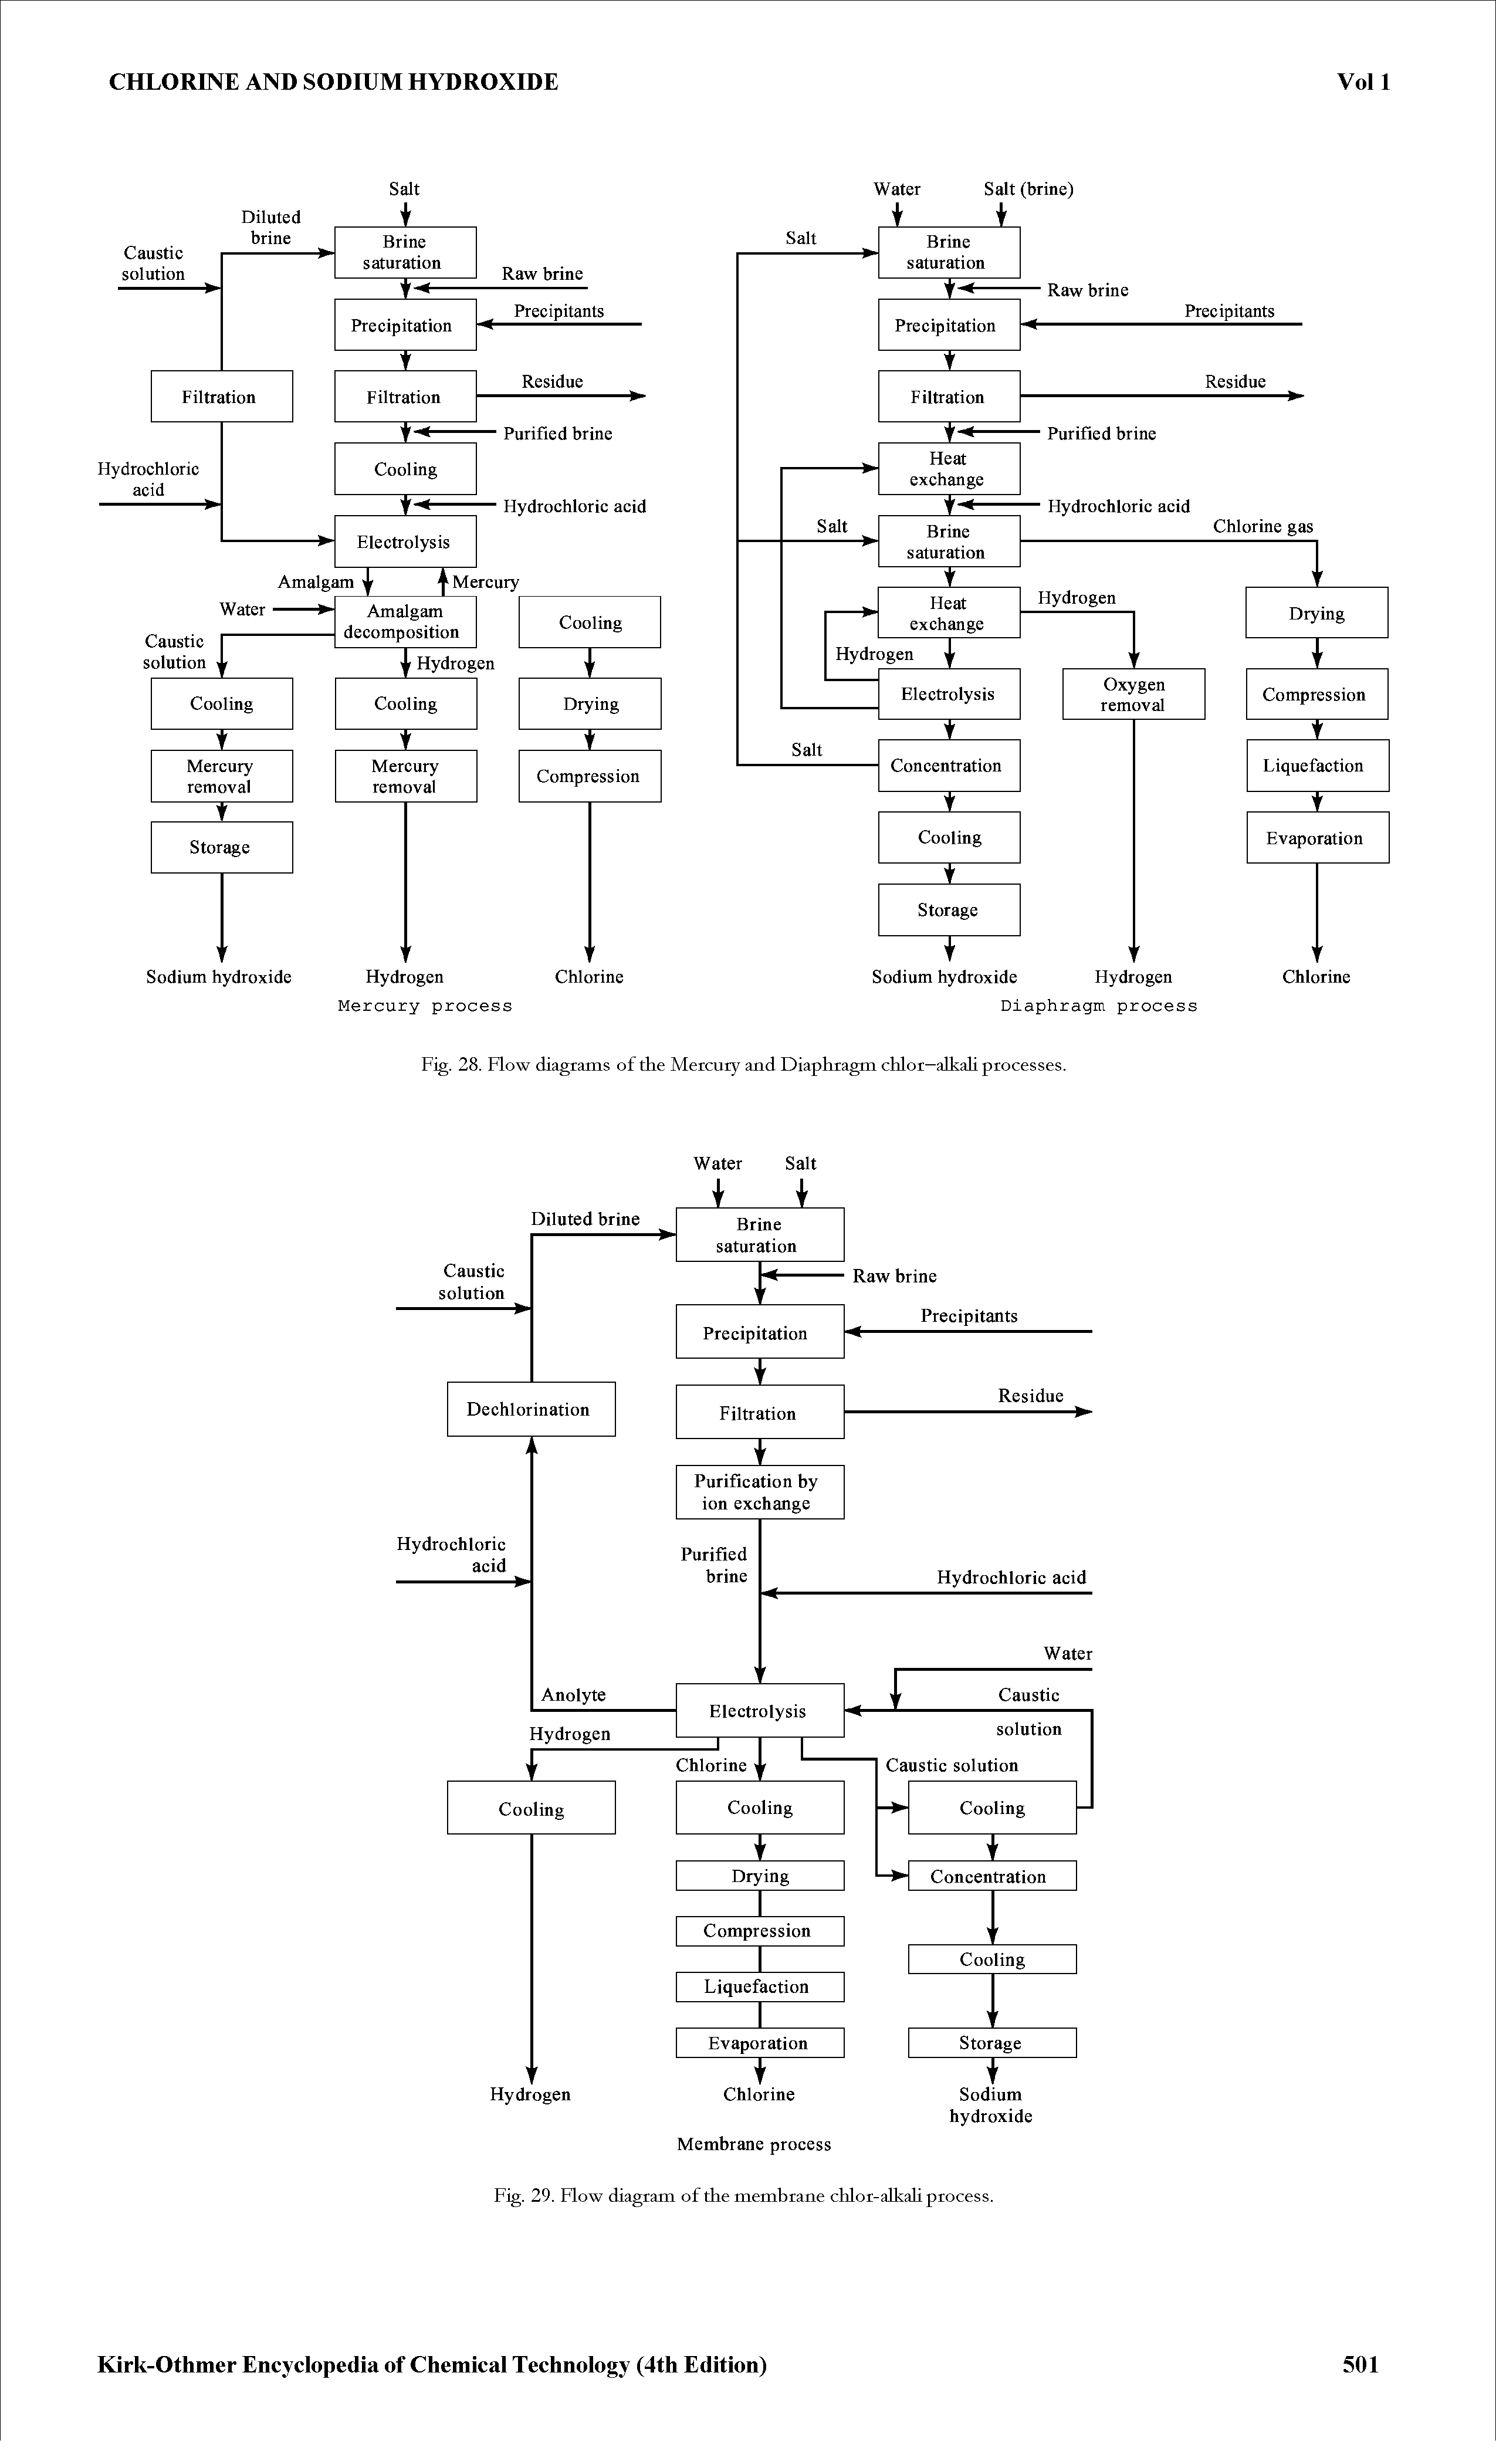 Fig. 29. Flow diagram of the membrane chlor-alkah process...